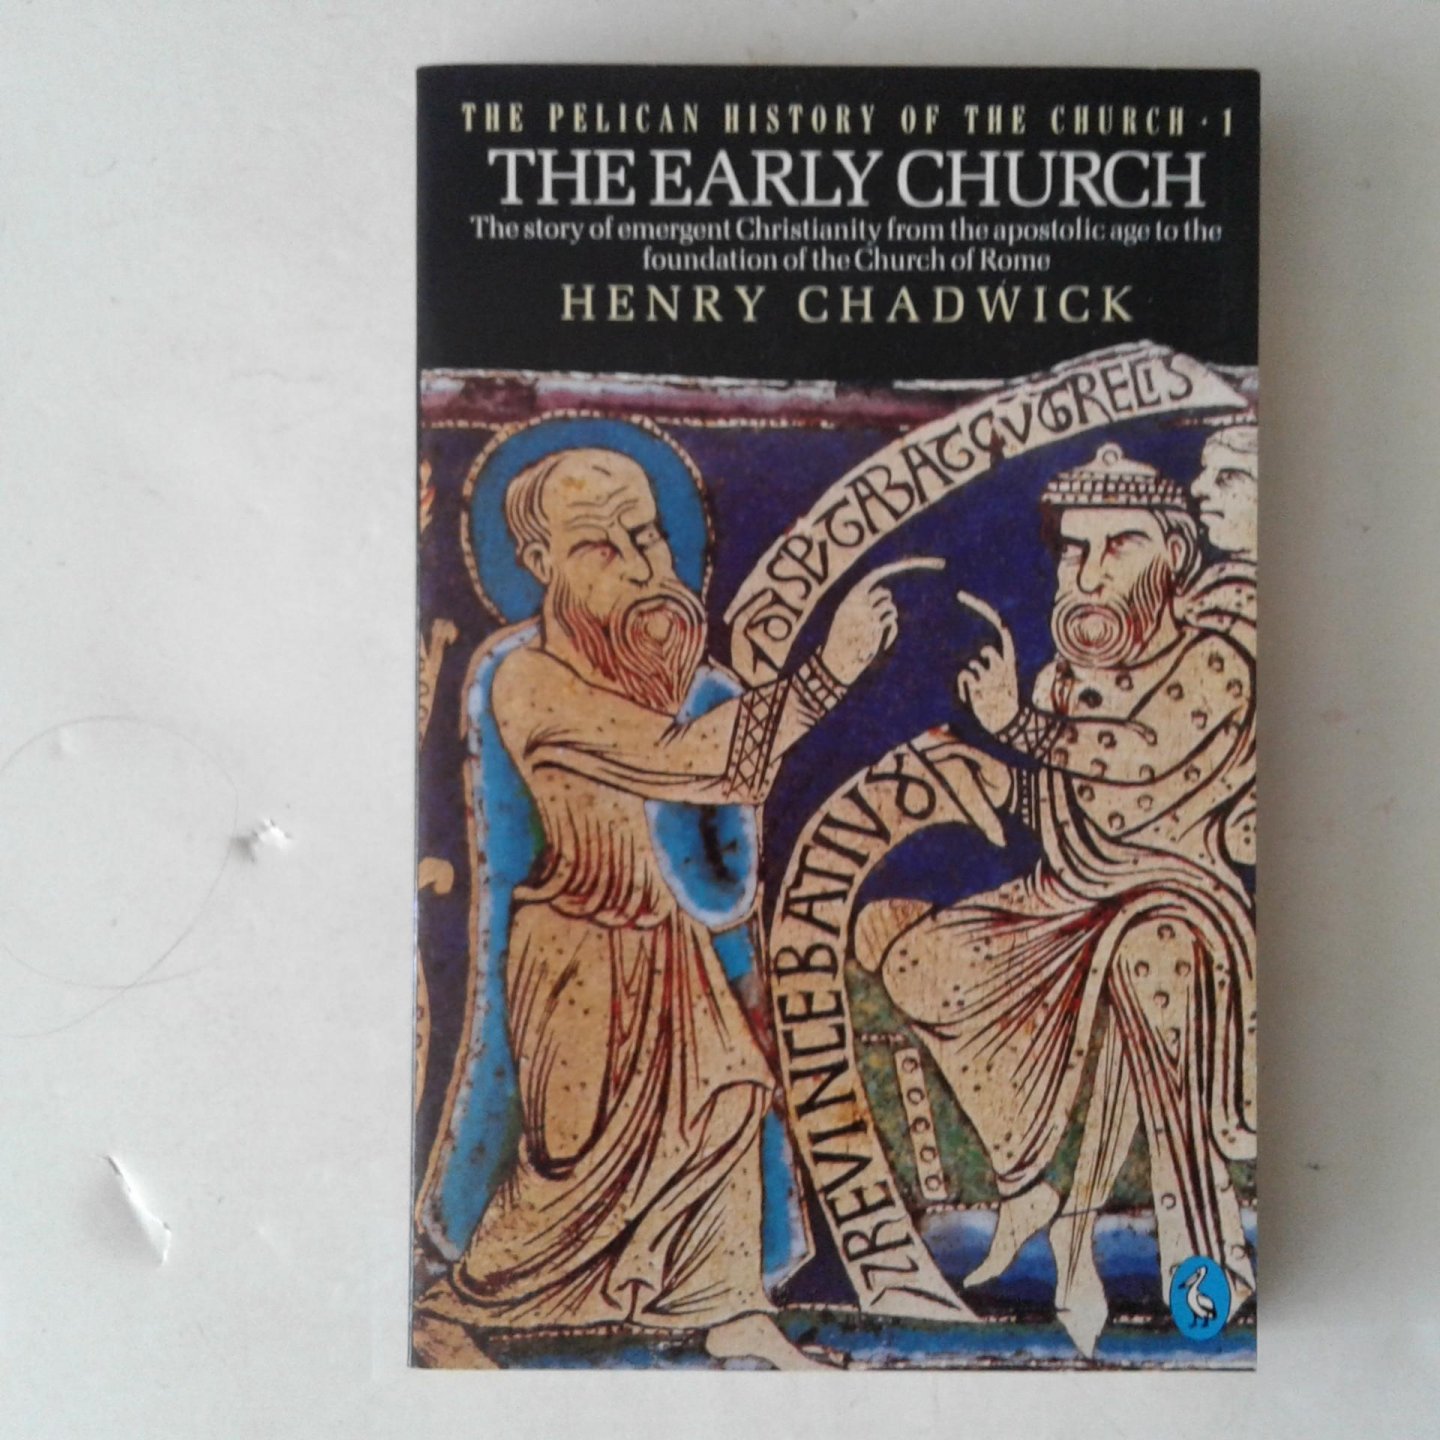 Chadwick, Henry - The Early Church